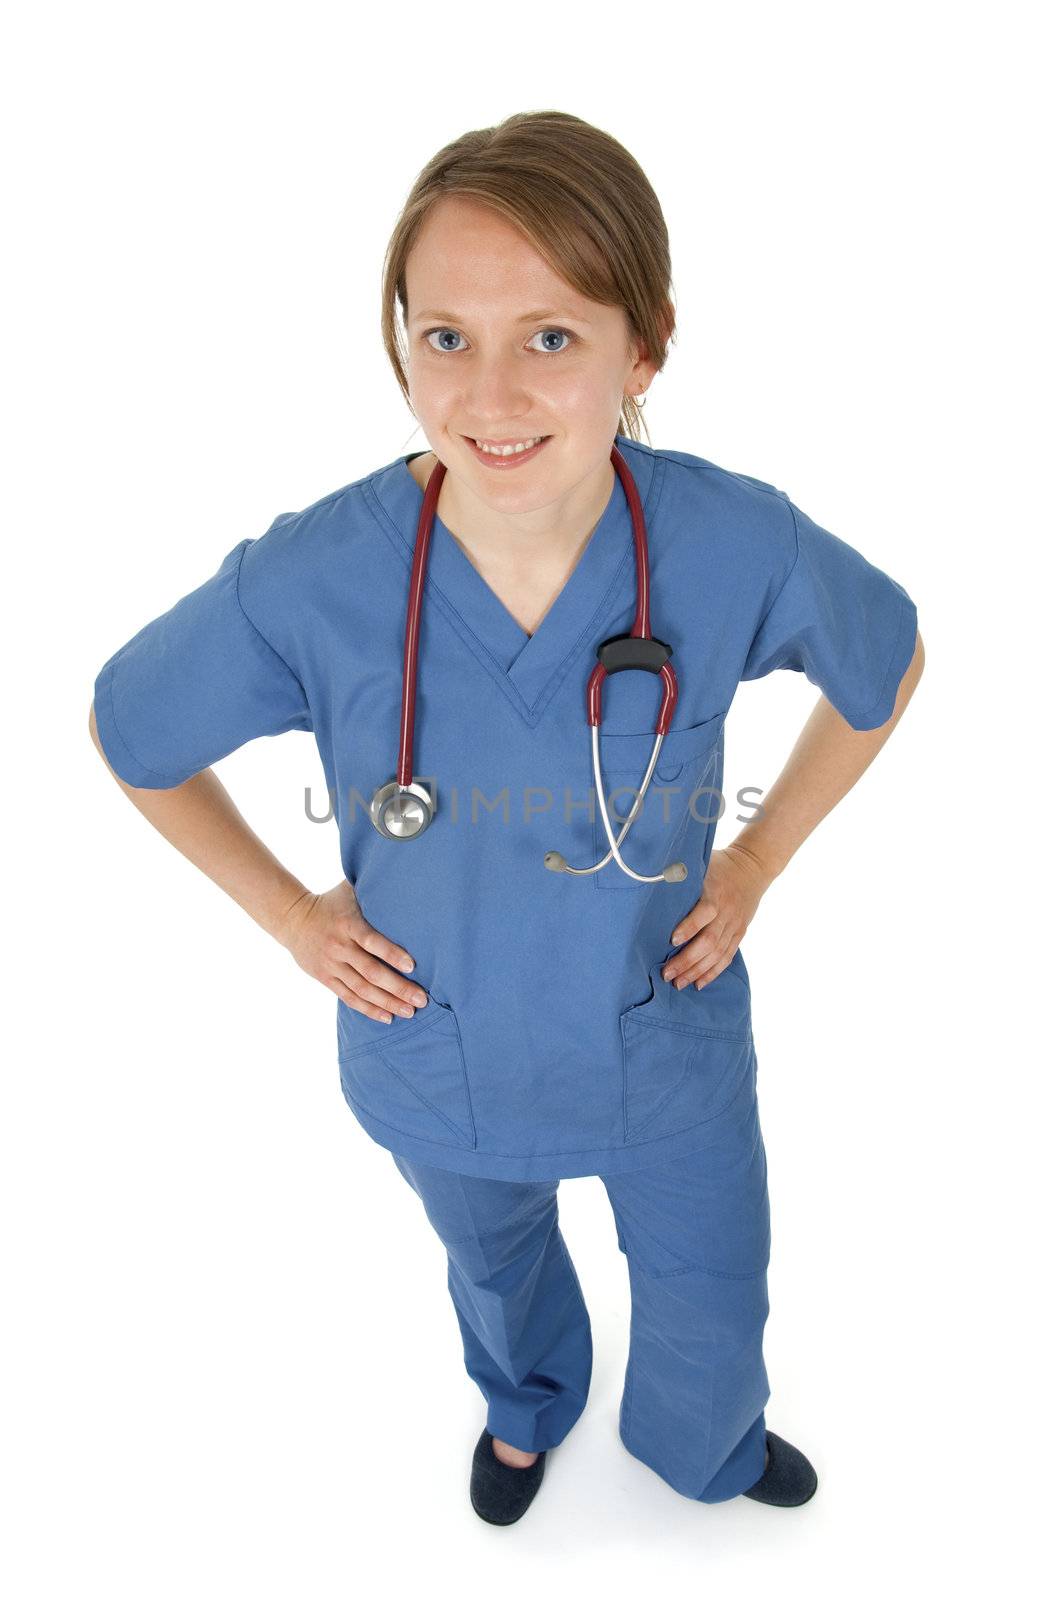 Smiling young nurse by anikasalsera